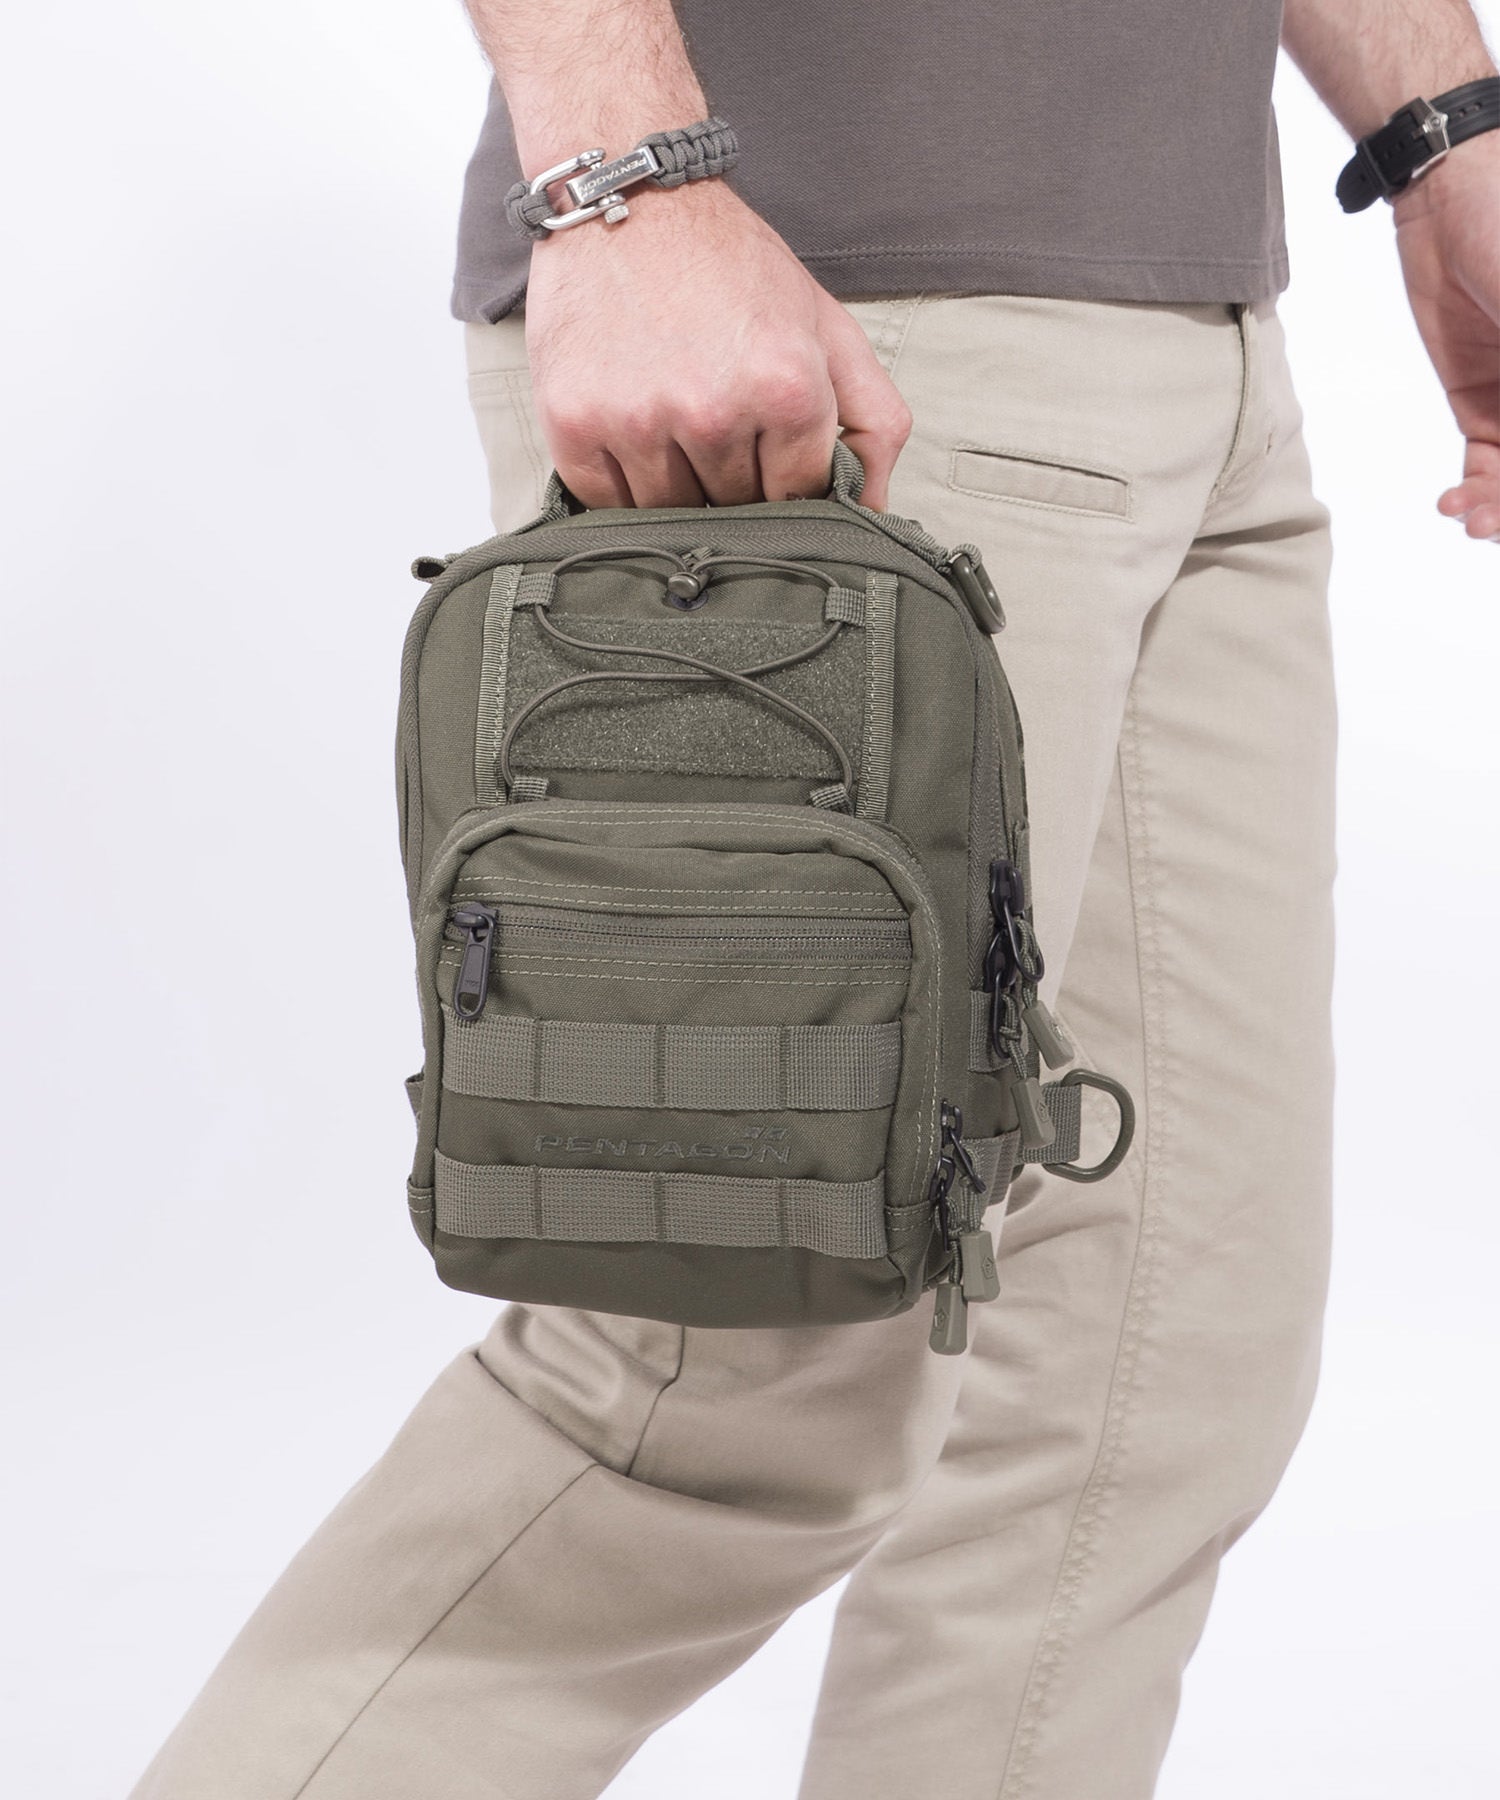 universal chest bag 2.0 di Pentagon indossata portata in mano